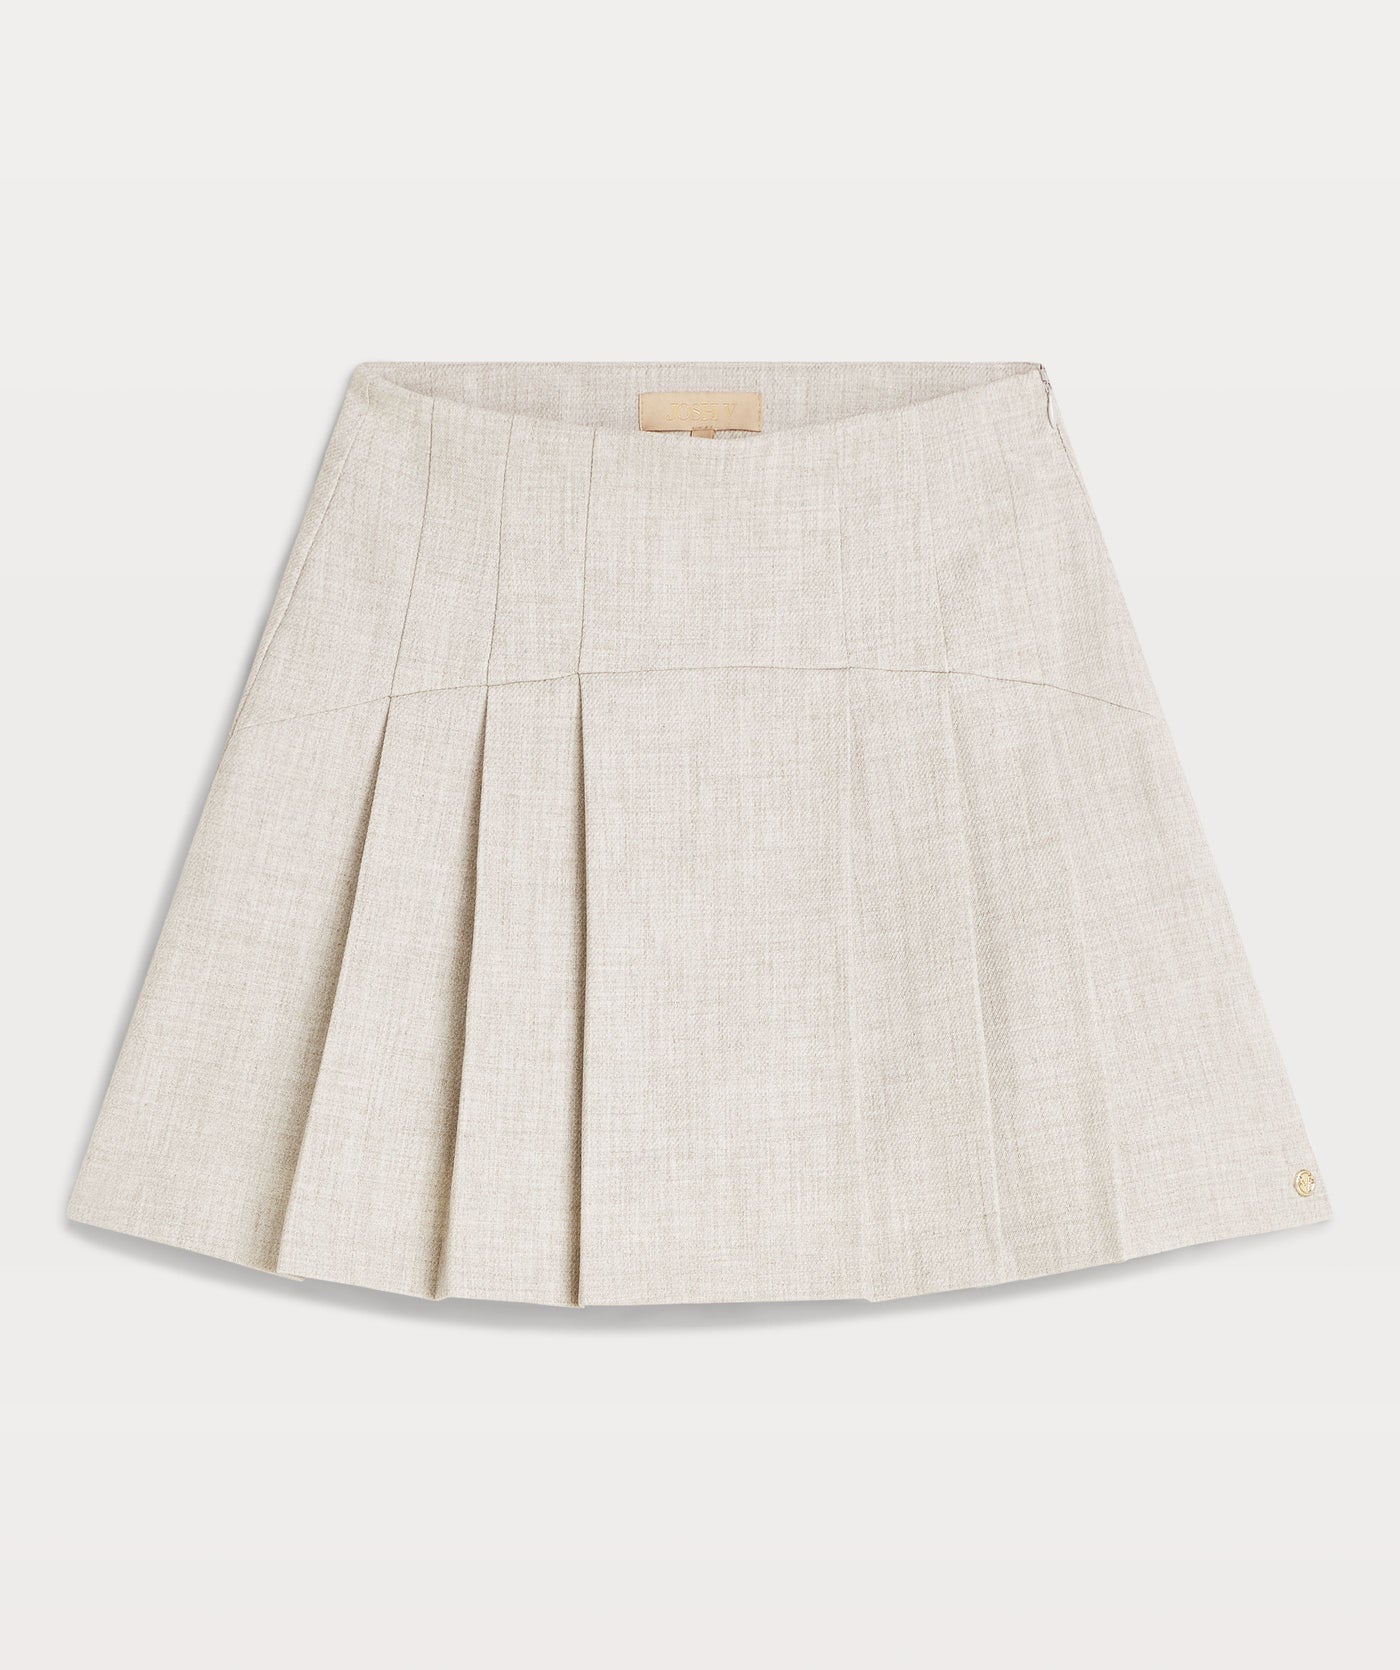 Skirt suza JV-2401-0502 Light grey